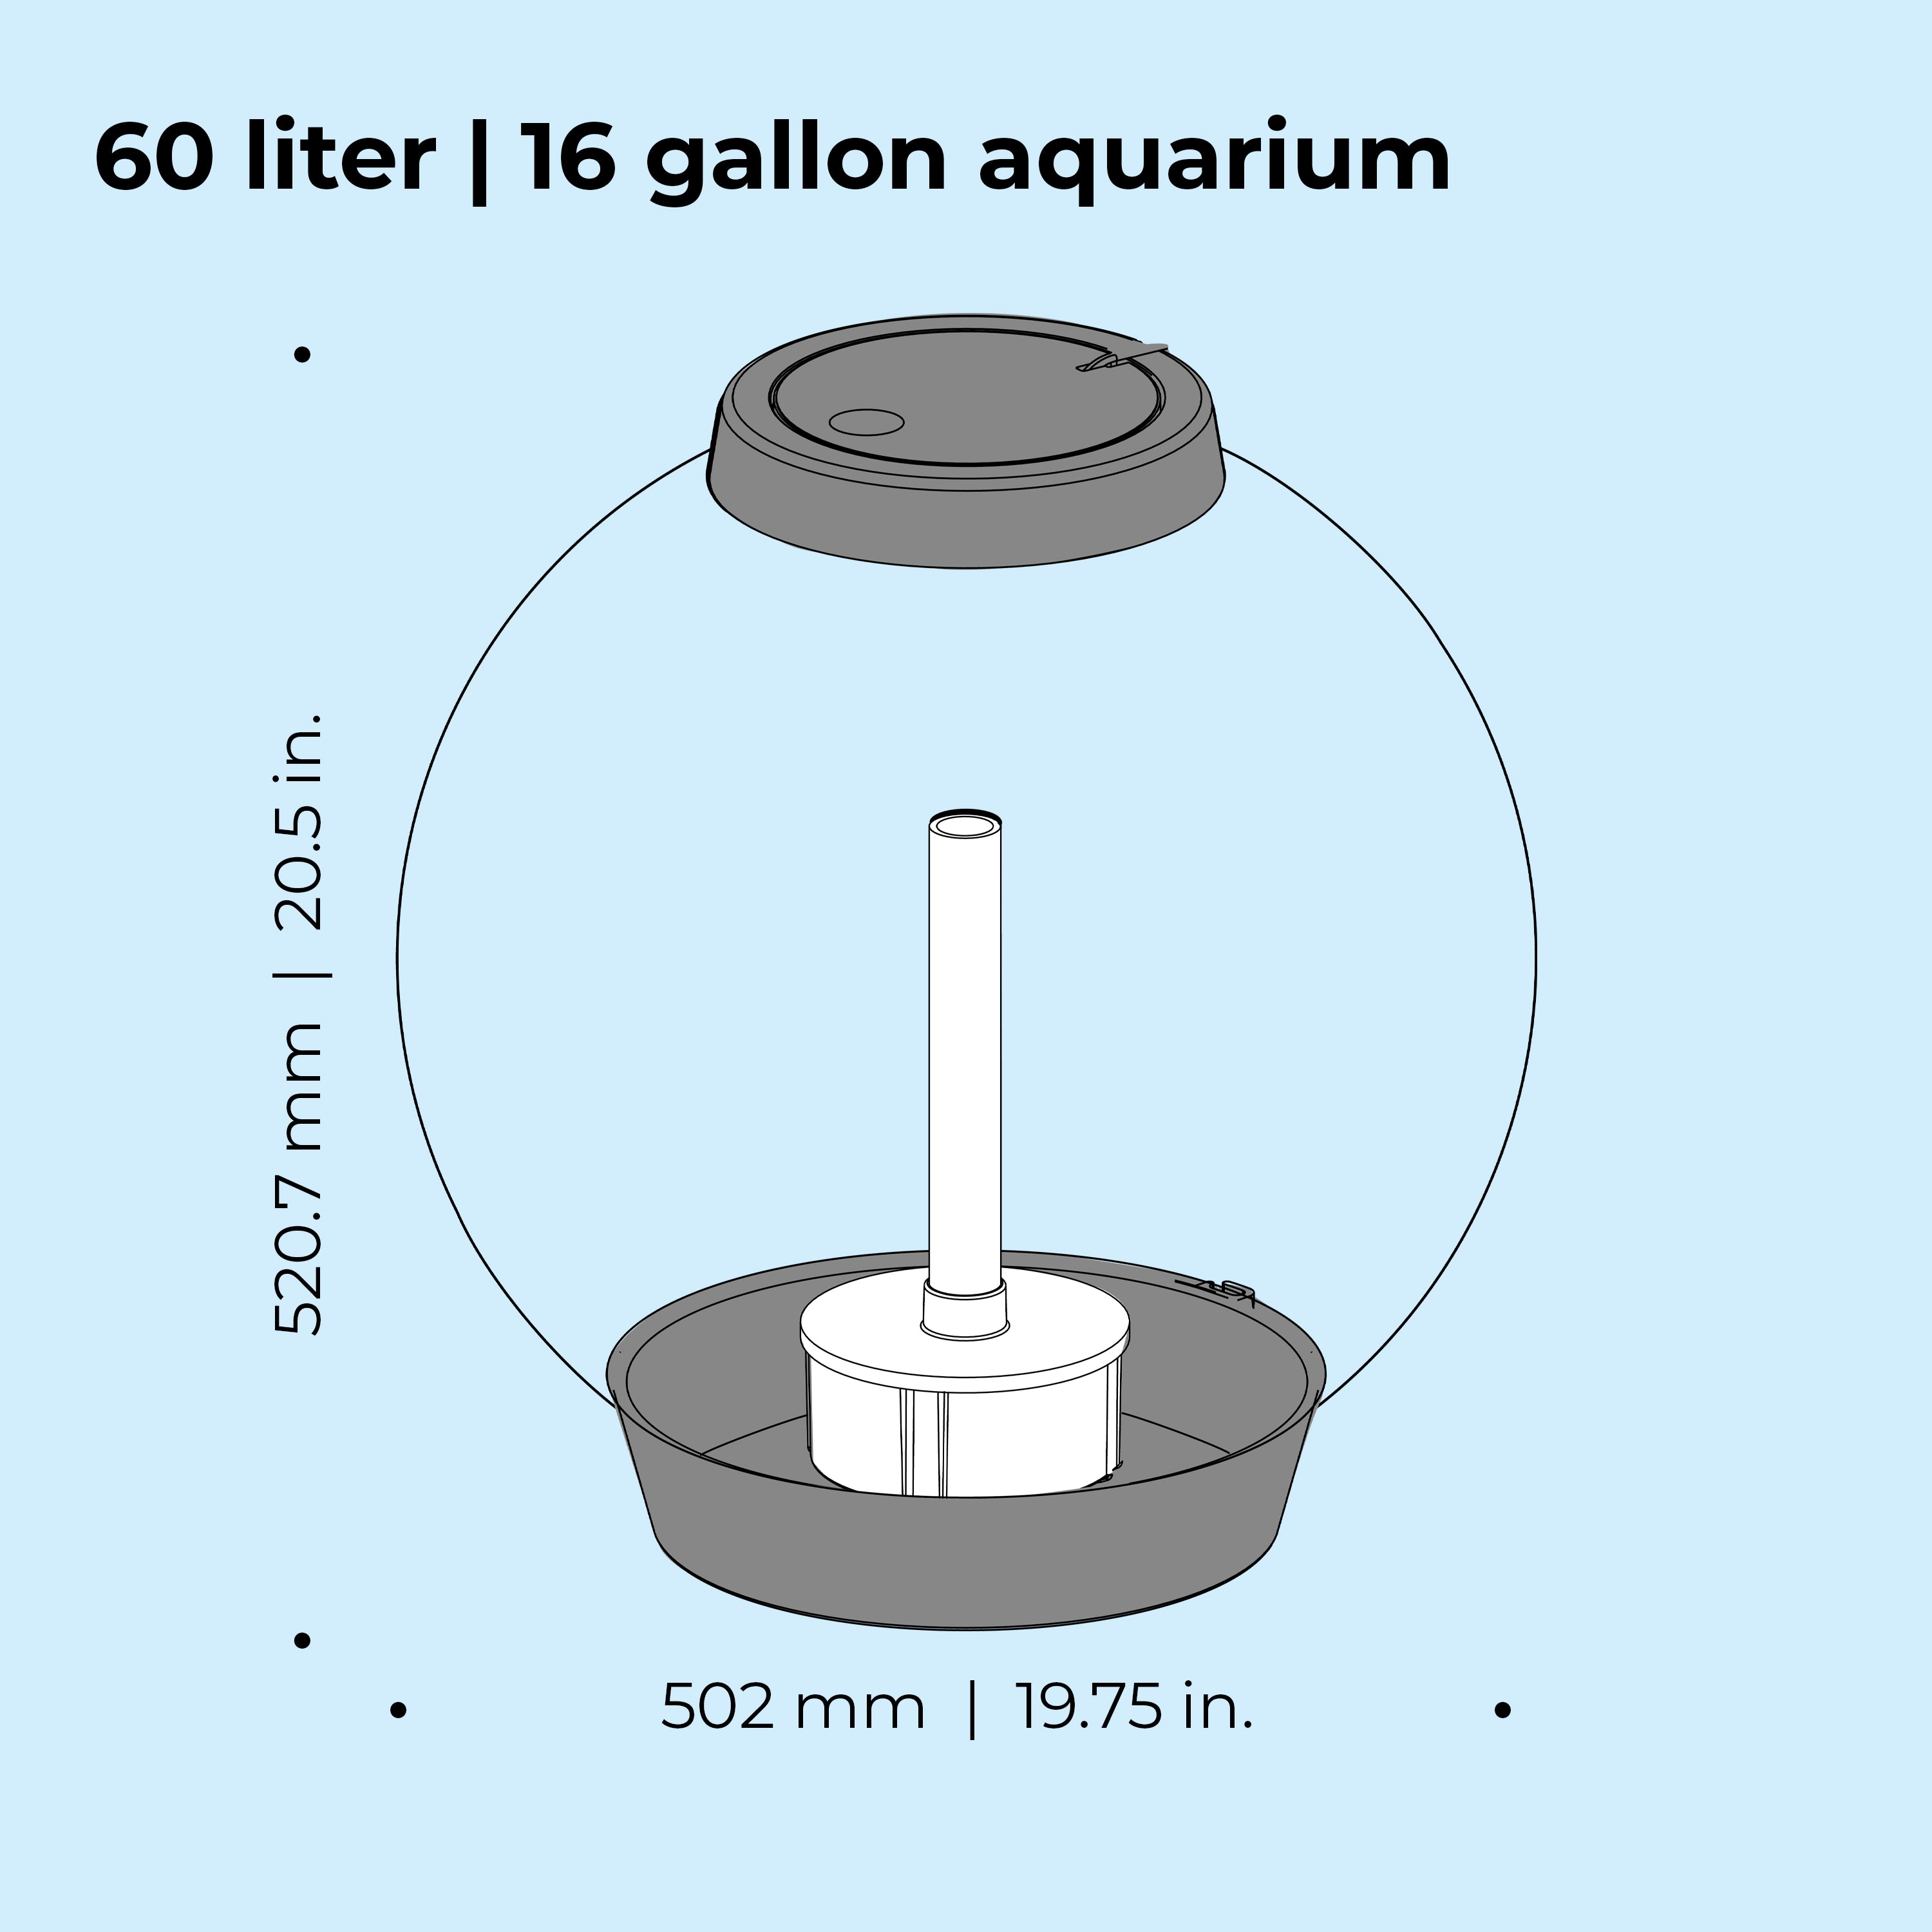 CLASSIC 60 Aquarium with MCR Light - 16 gallon, 60 liter dimension chart